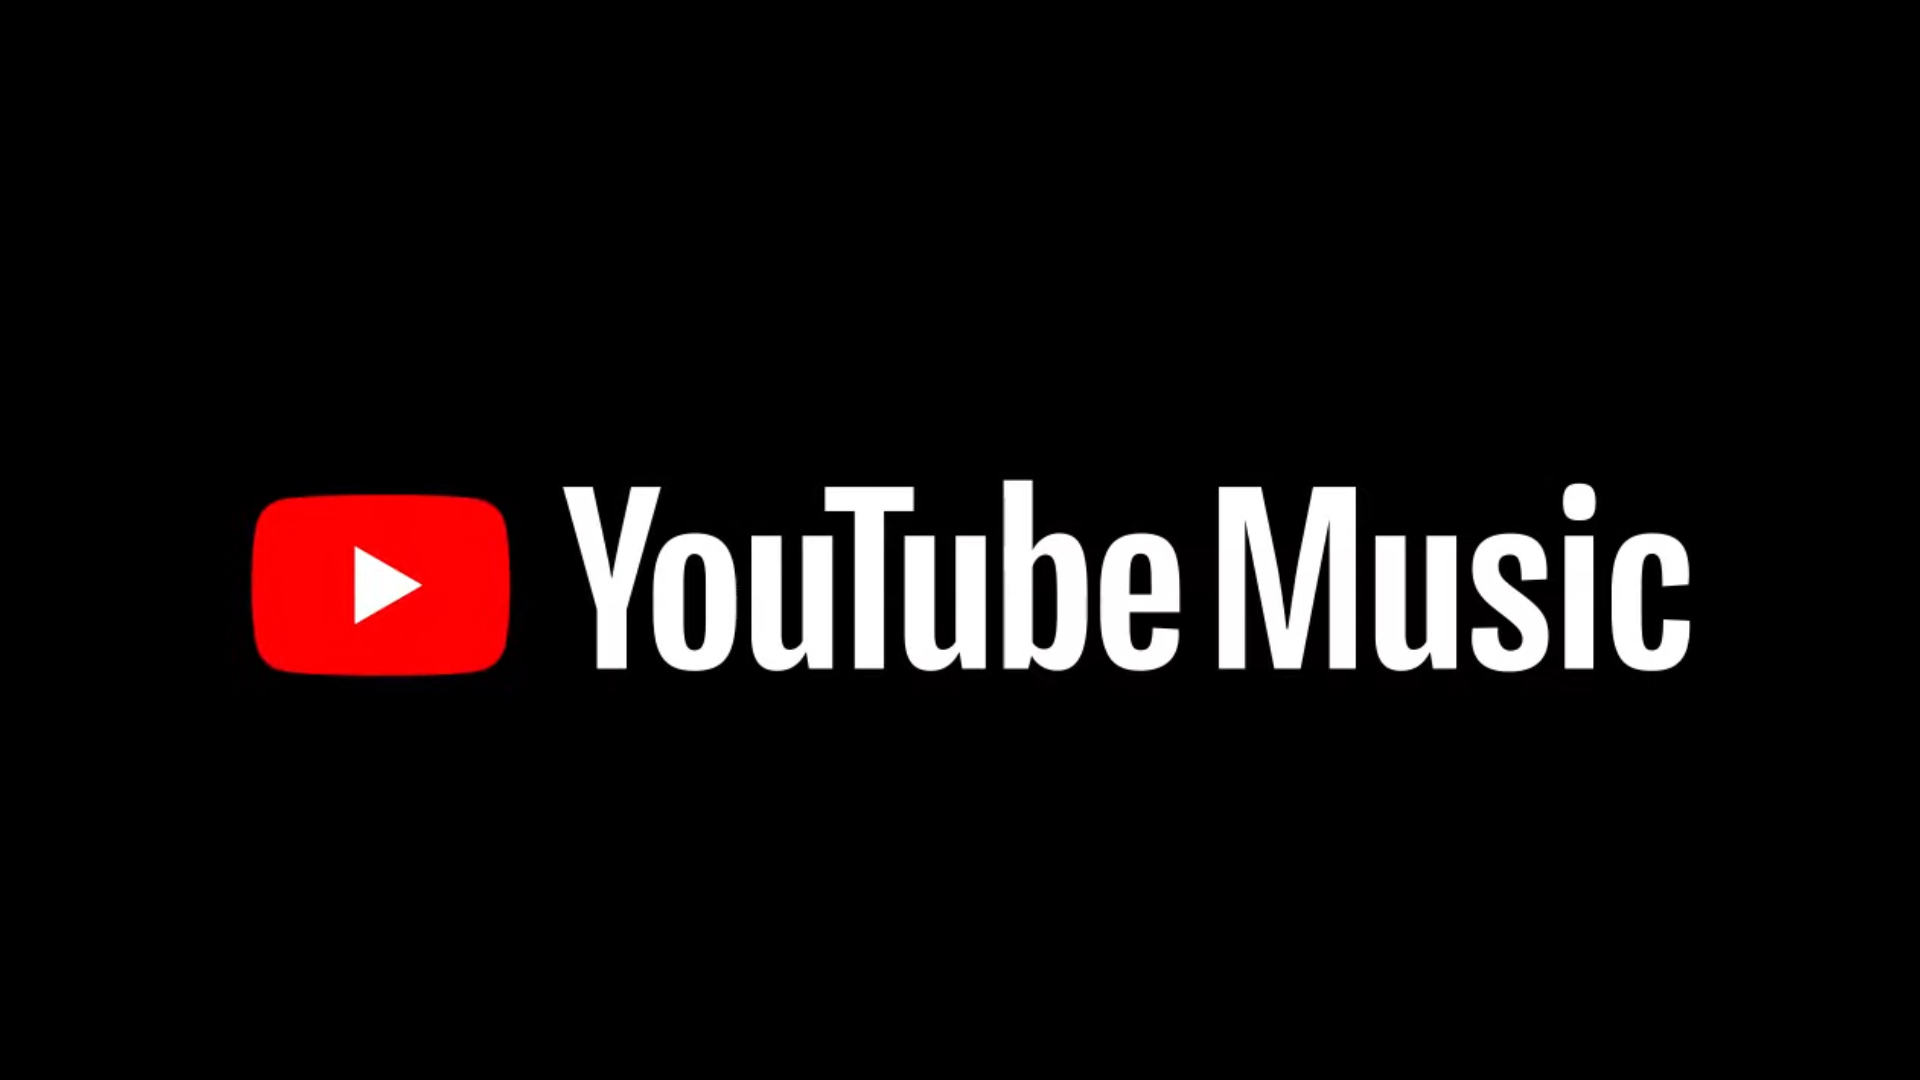 Включи ютуб версия. YOUTUBER. Эмблема ютуб. Youtube Music логотип. M youtube.